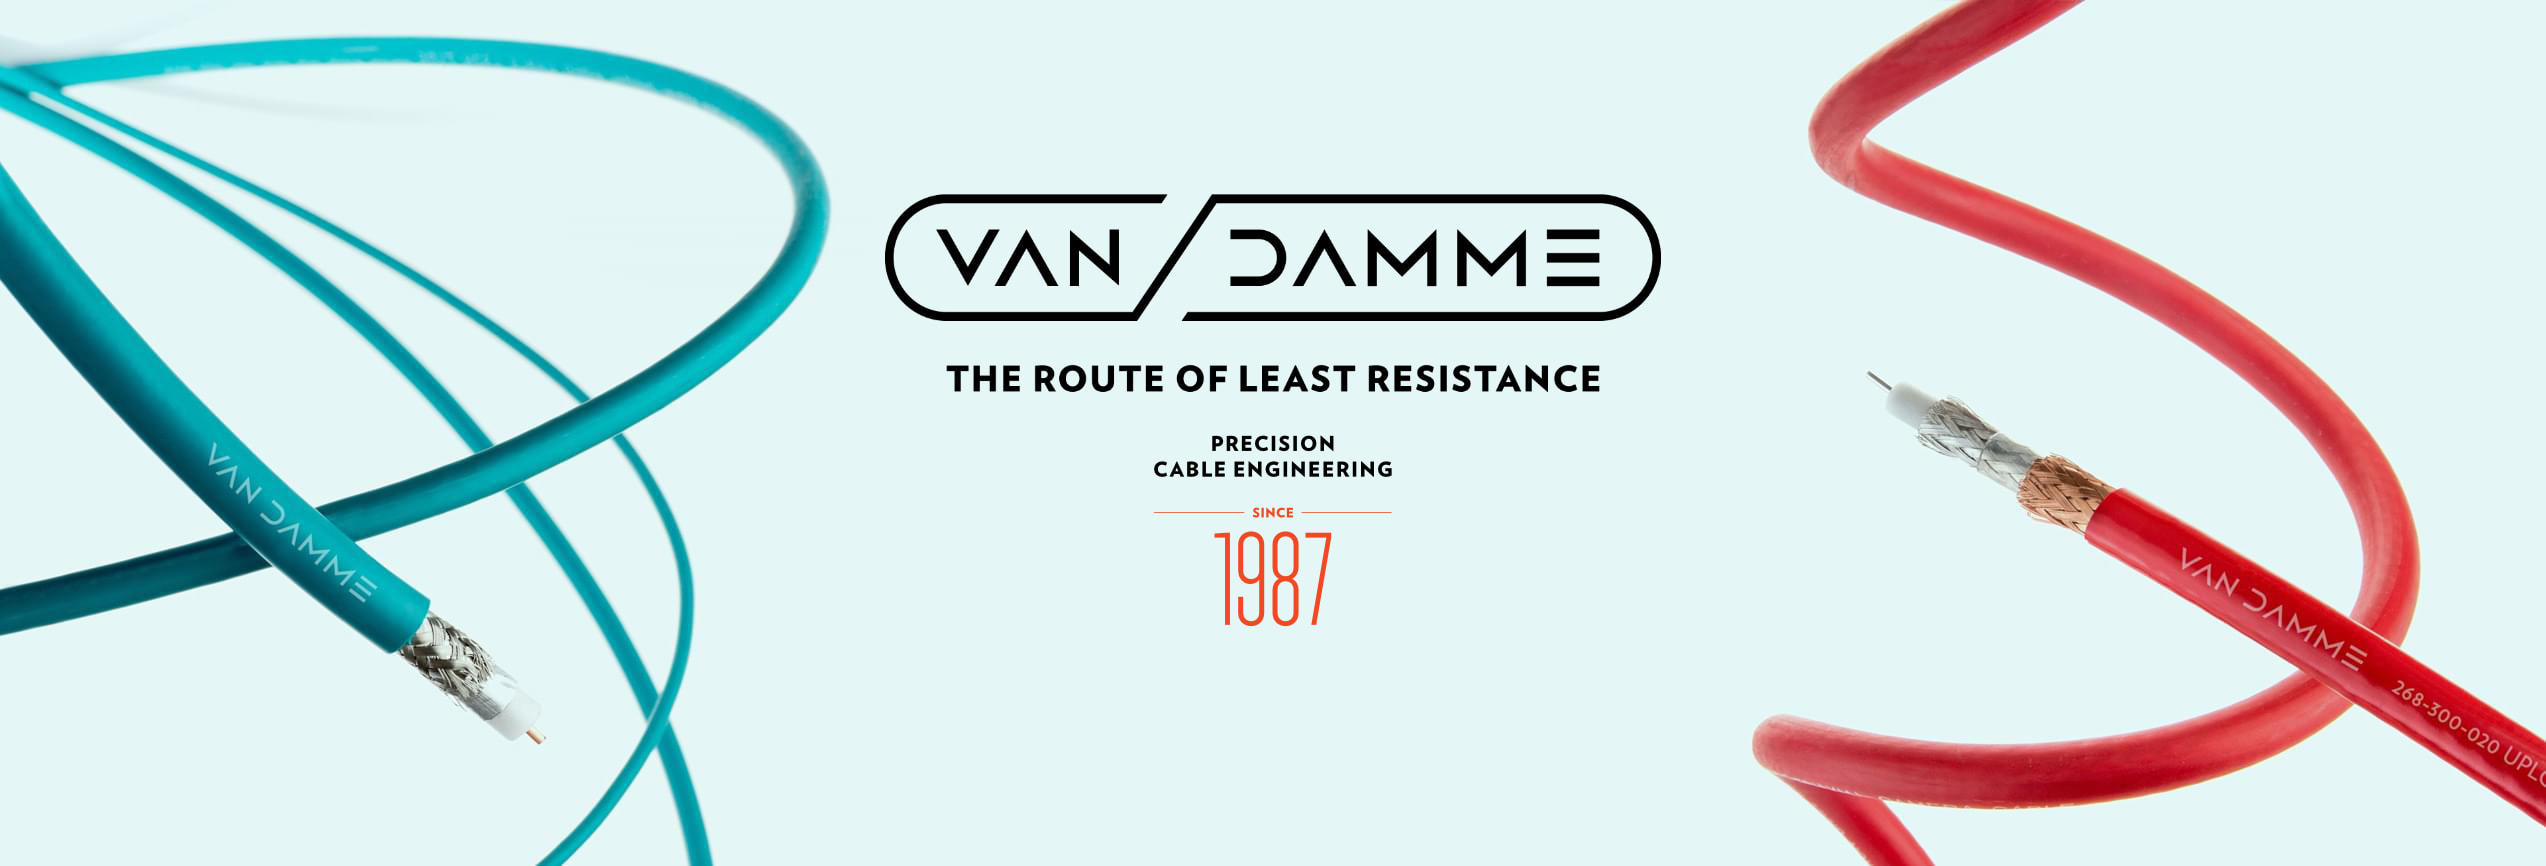 Van Damme Cable Banner Min